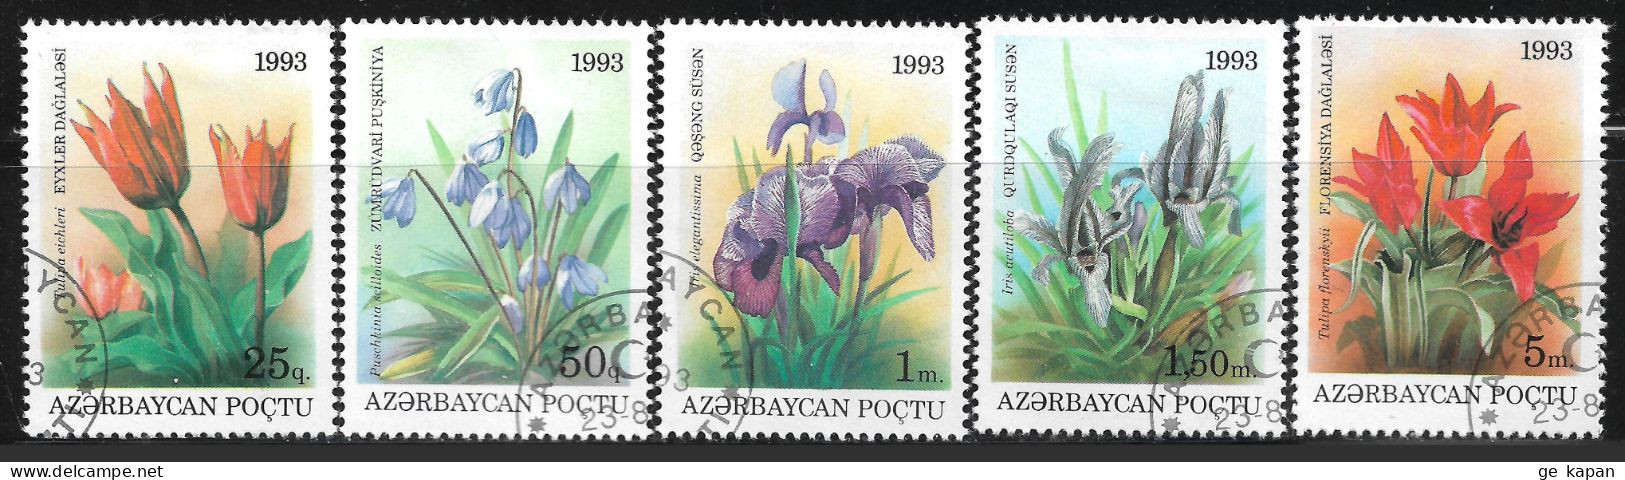 1993 AZERBAJAN Set Of 5 Used STAMPS (Michel # 91-95) - Azerbaiján